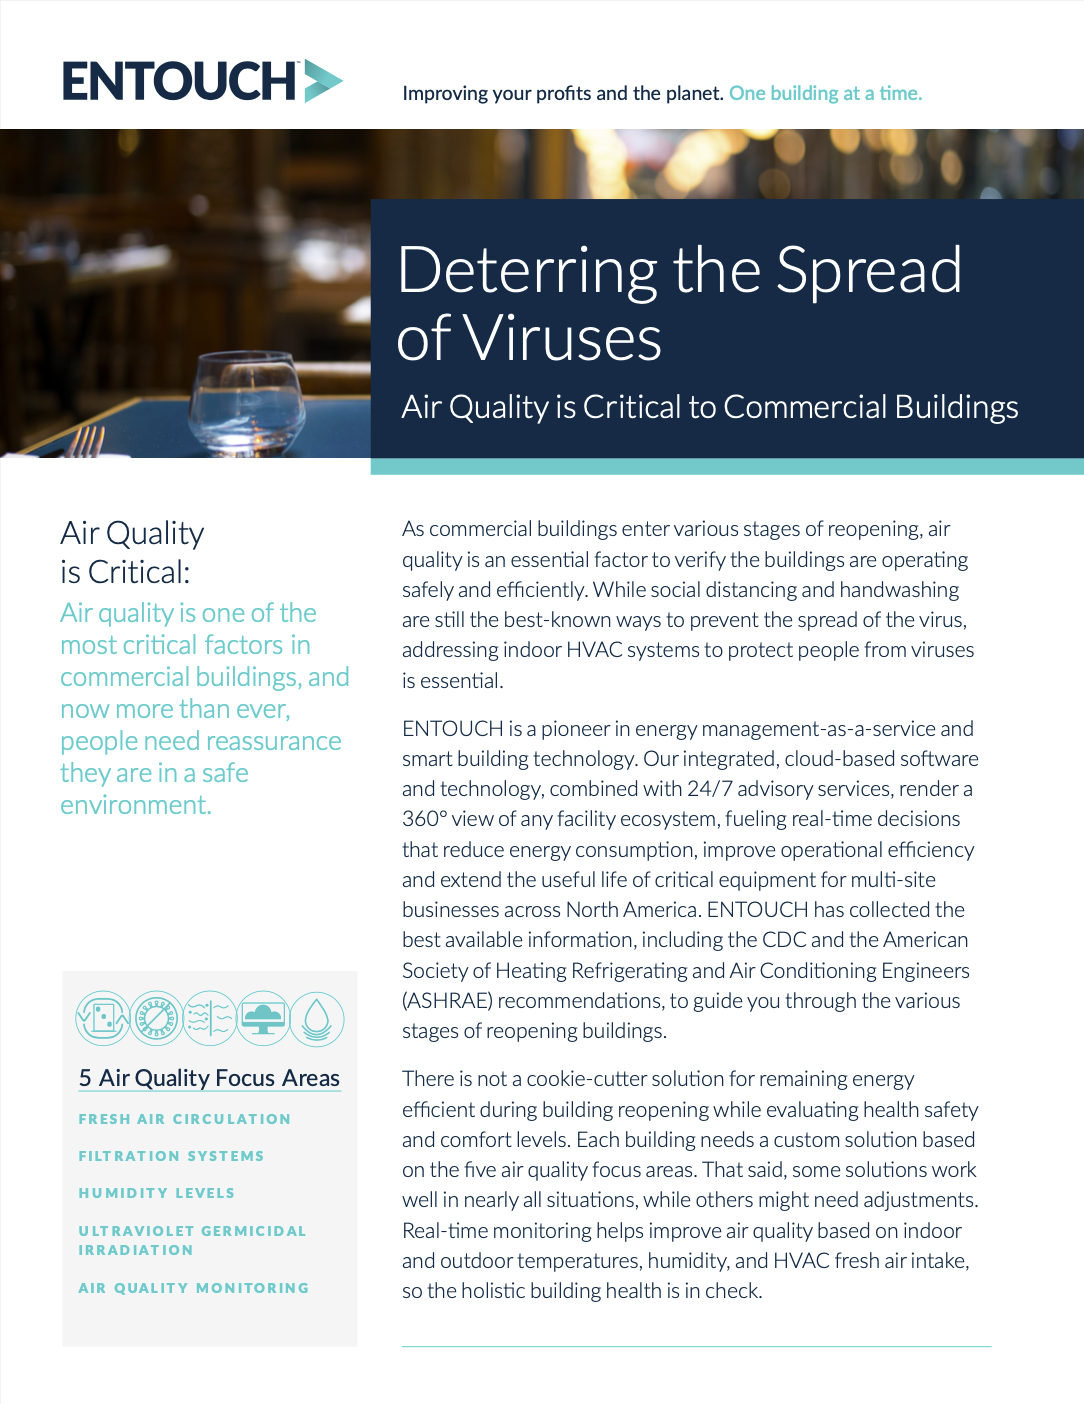 Deterring Spread of Viruses